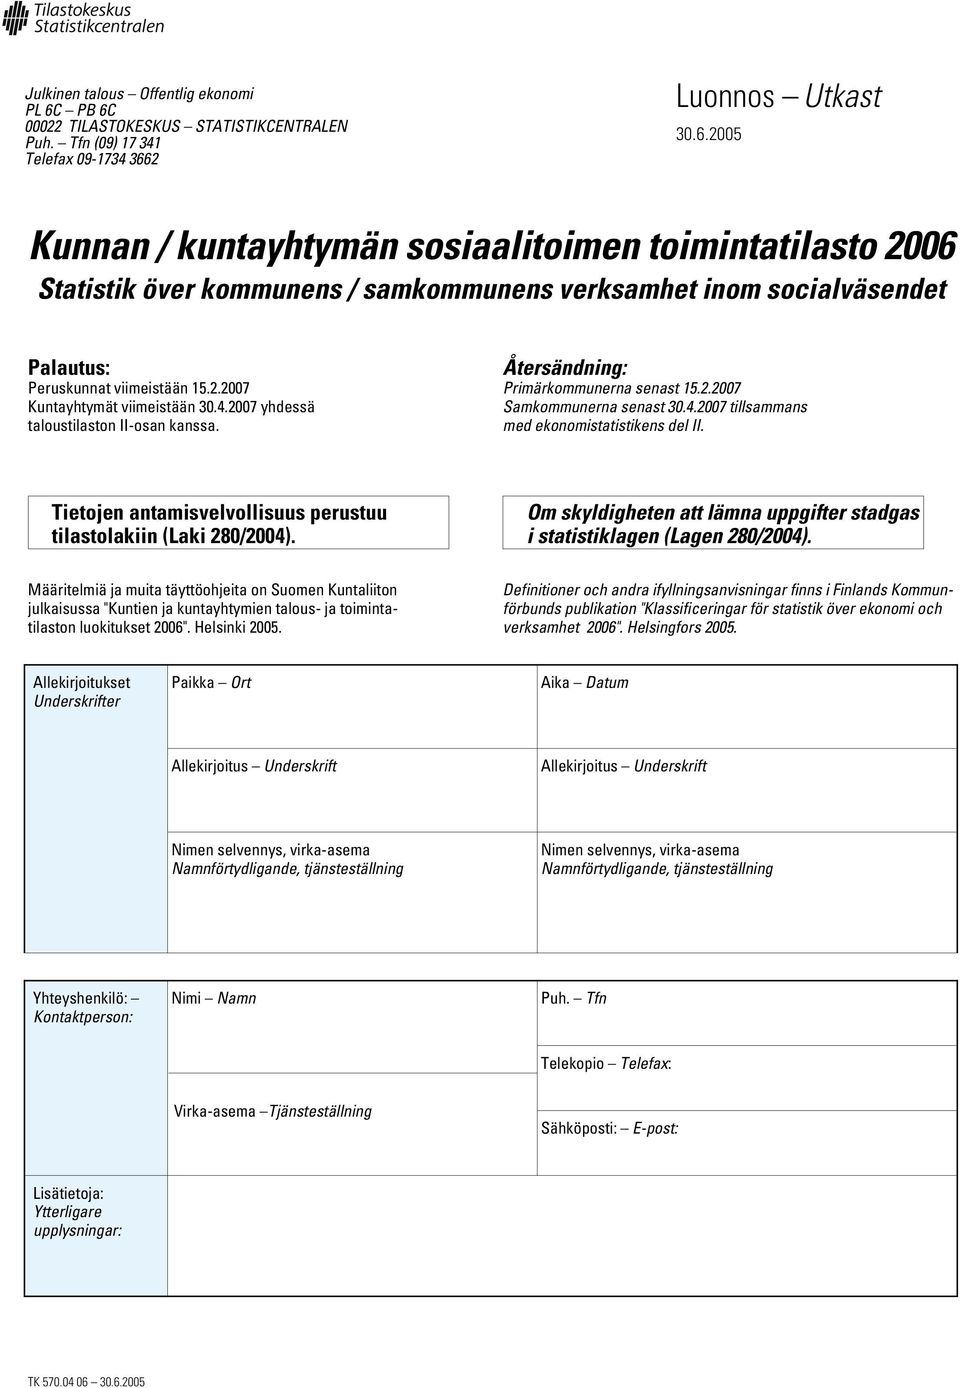 Tietojen antamisvelvollisuus perustuu tilastolakiin (Laki 280/2004). Om skyldigheten att lämna uppgifter stadgas i statistiklagen (Lagen 280/2004).